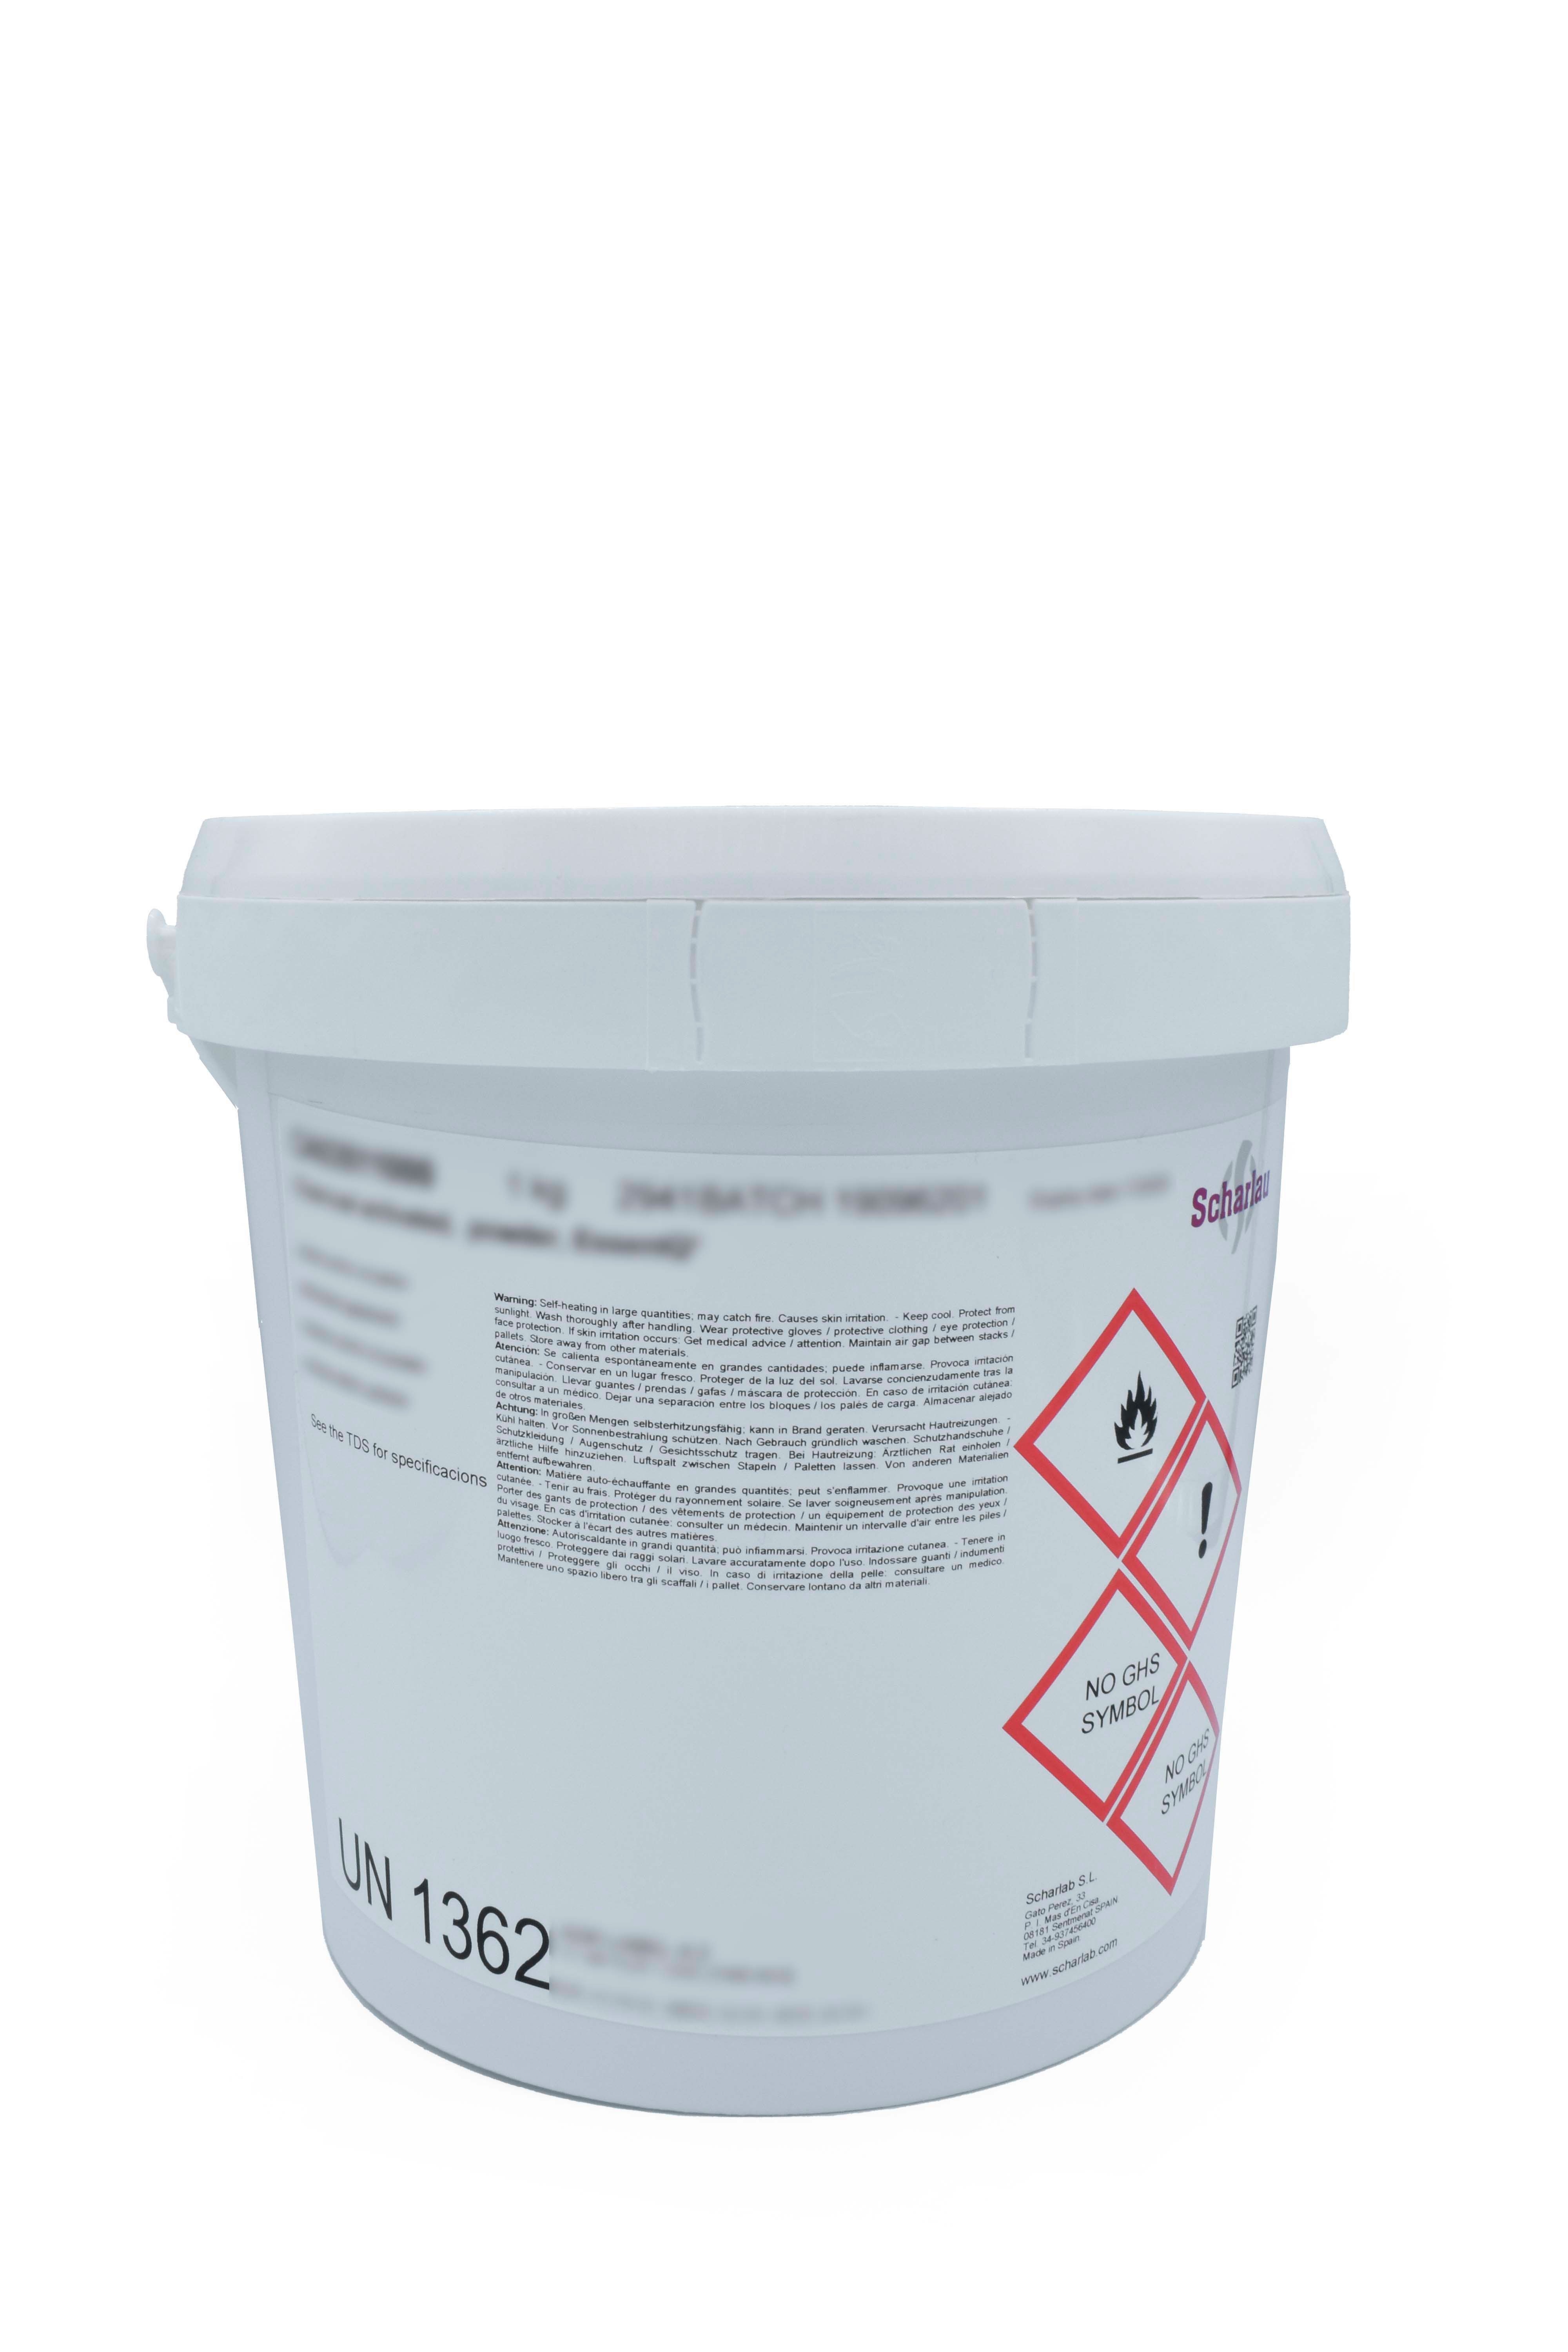 Sodio cloruro, para análisis, ExpertQ®, ACS, ISO, Reag. Ph Eur - Scharlab